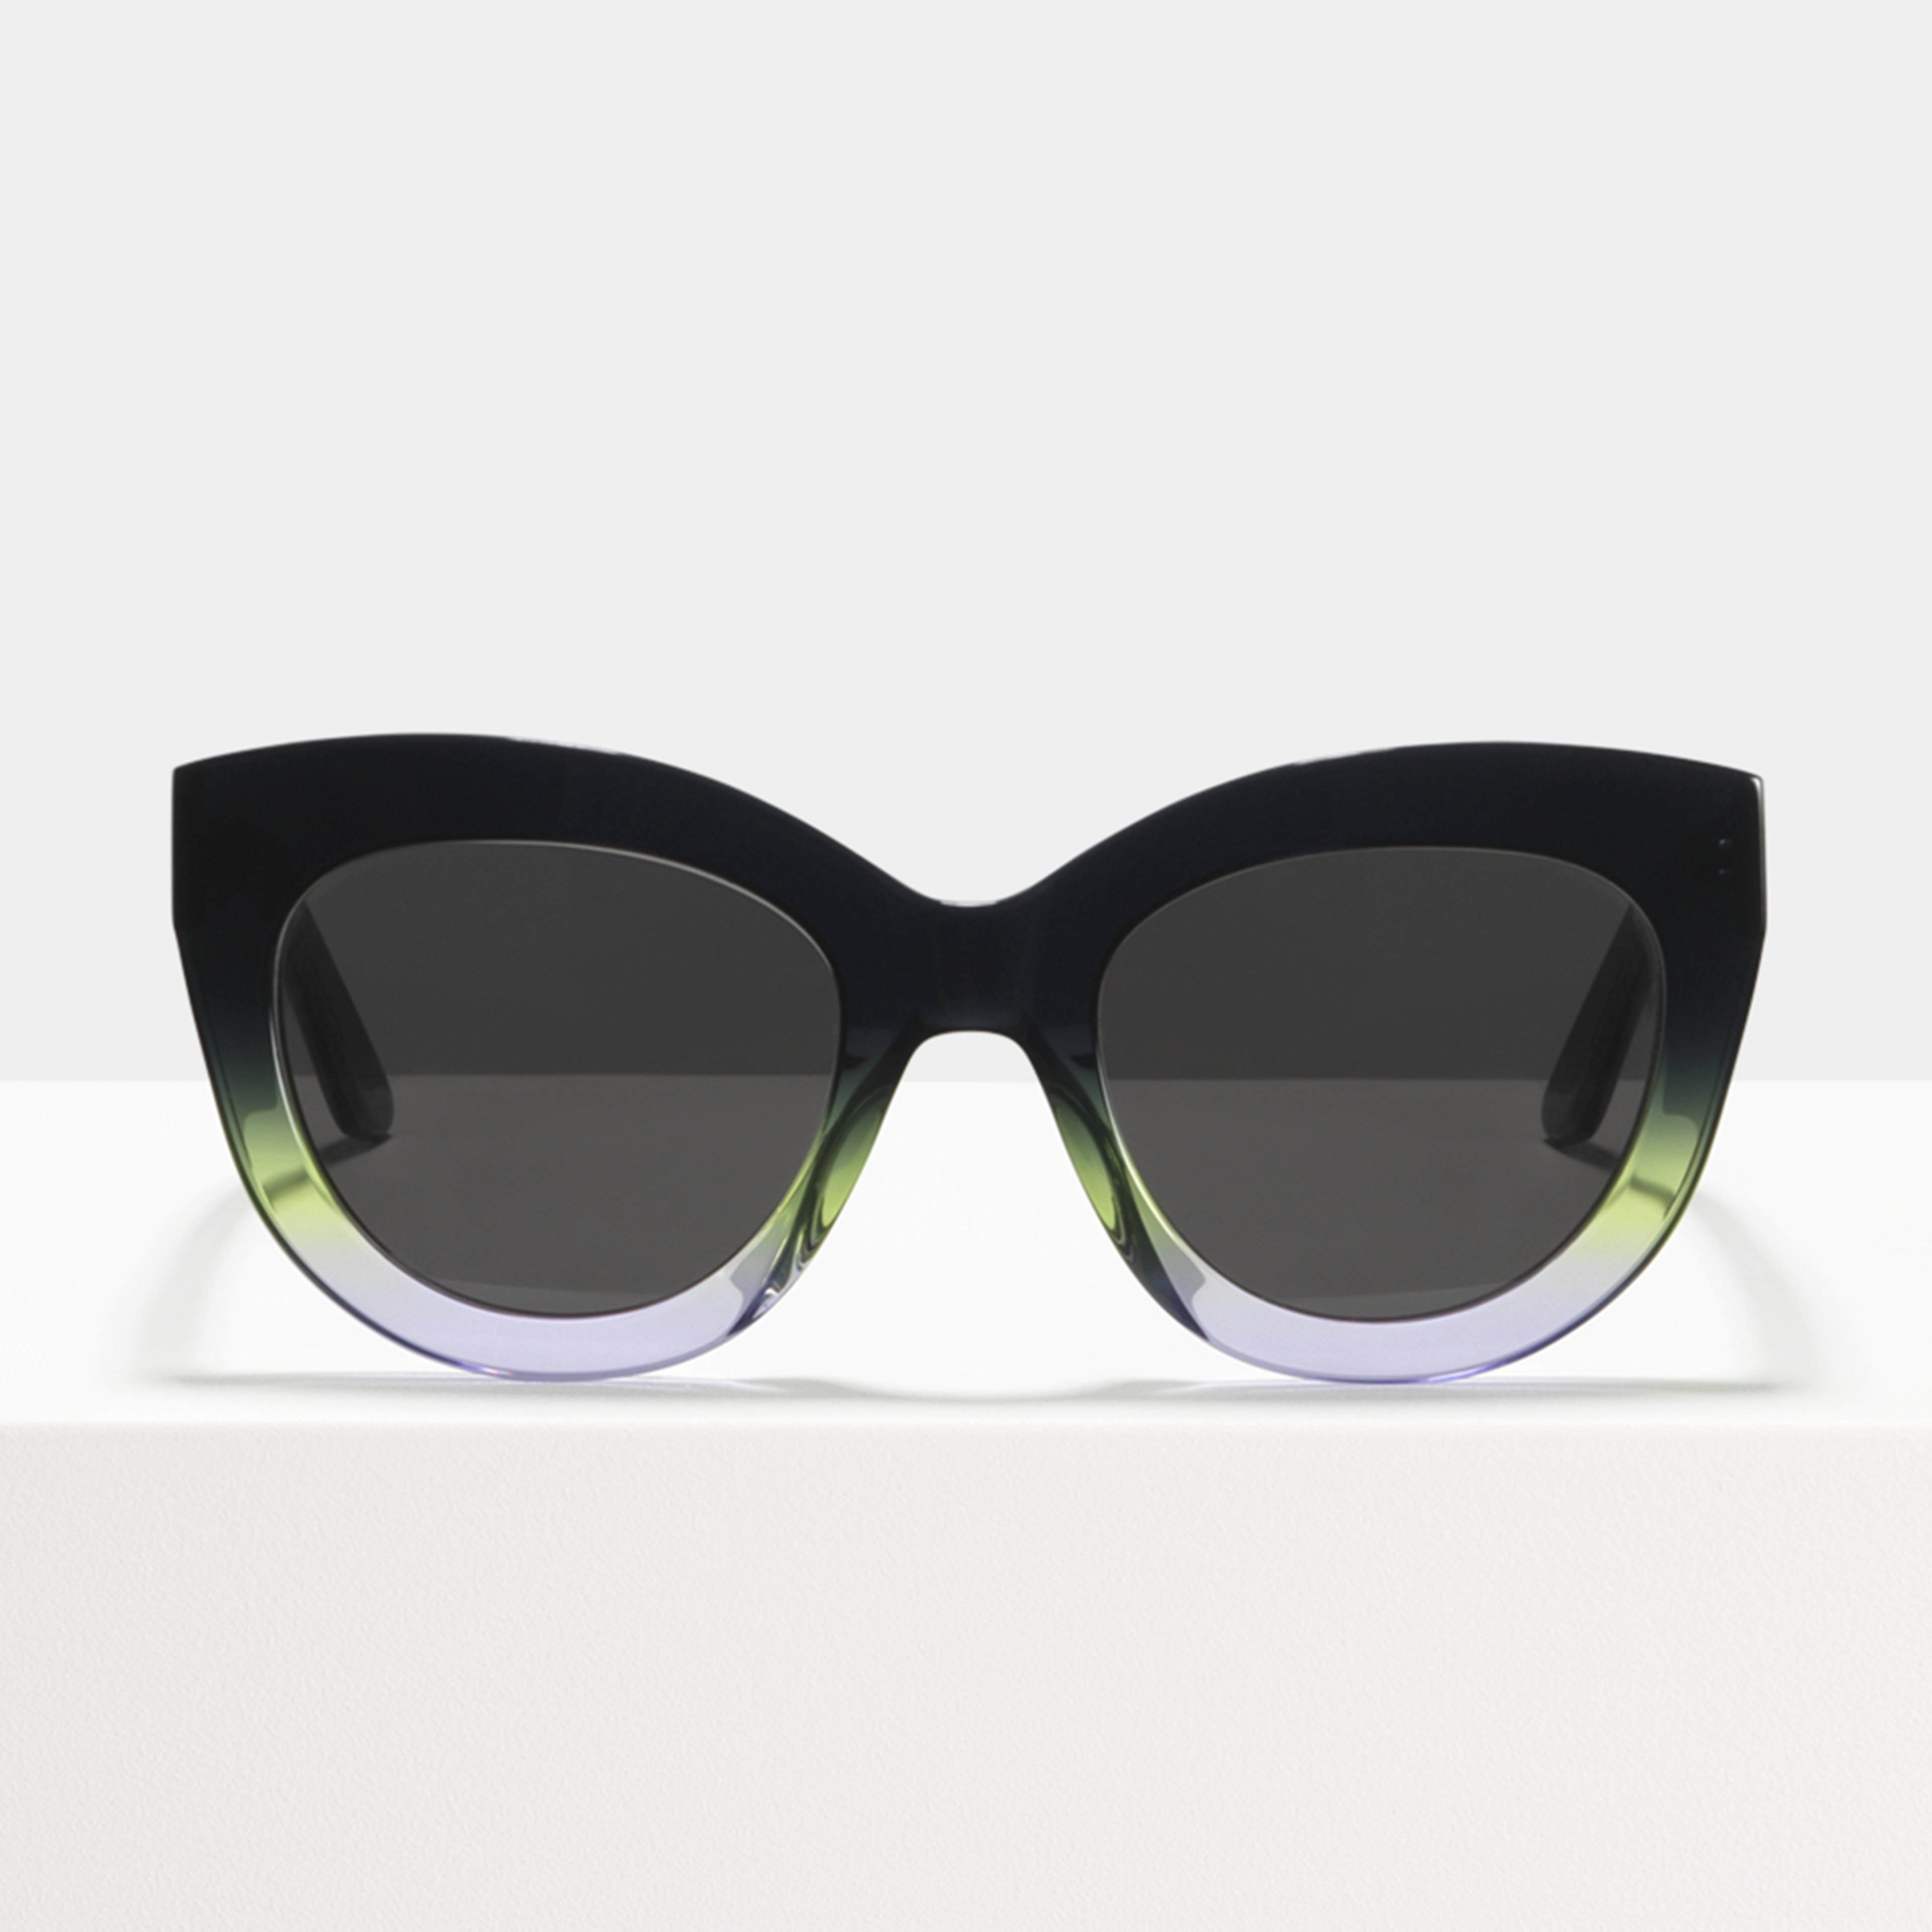 Ace & Tate Sunglasses |  Acetate in Brown, Green, Purple